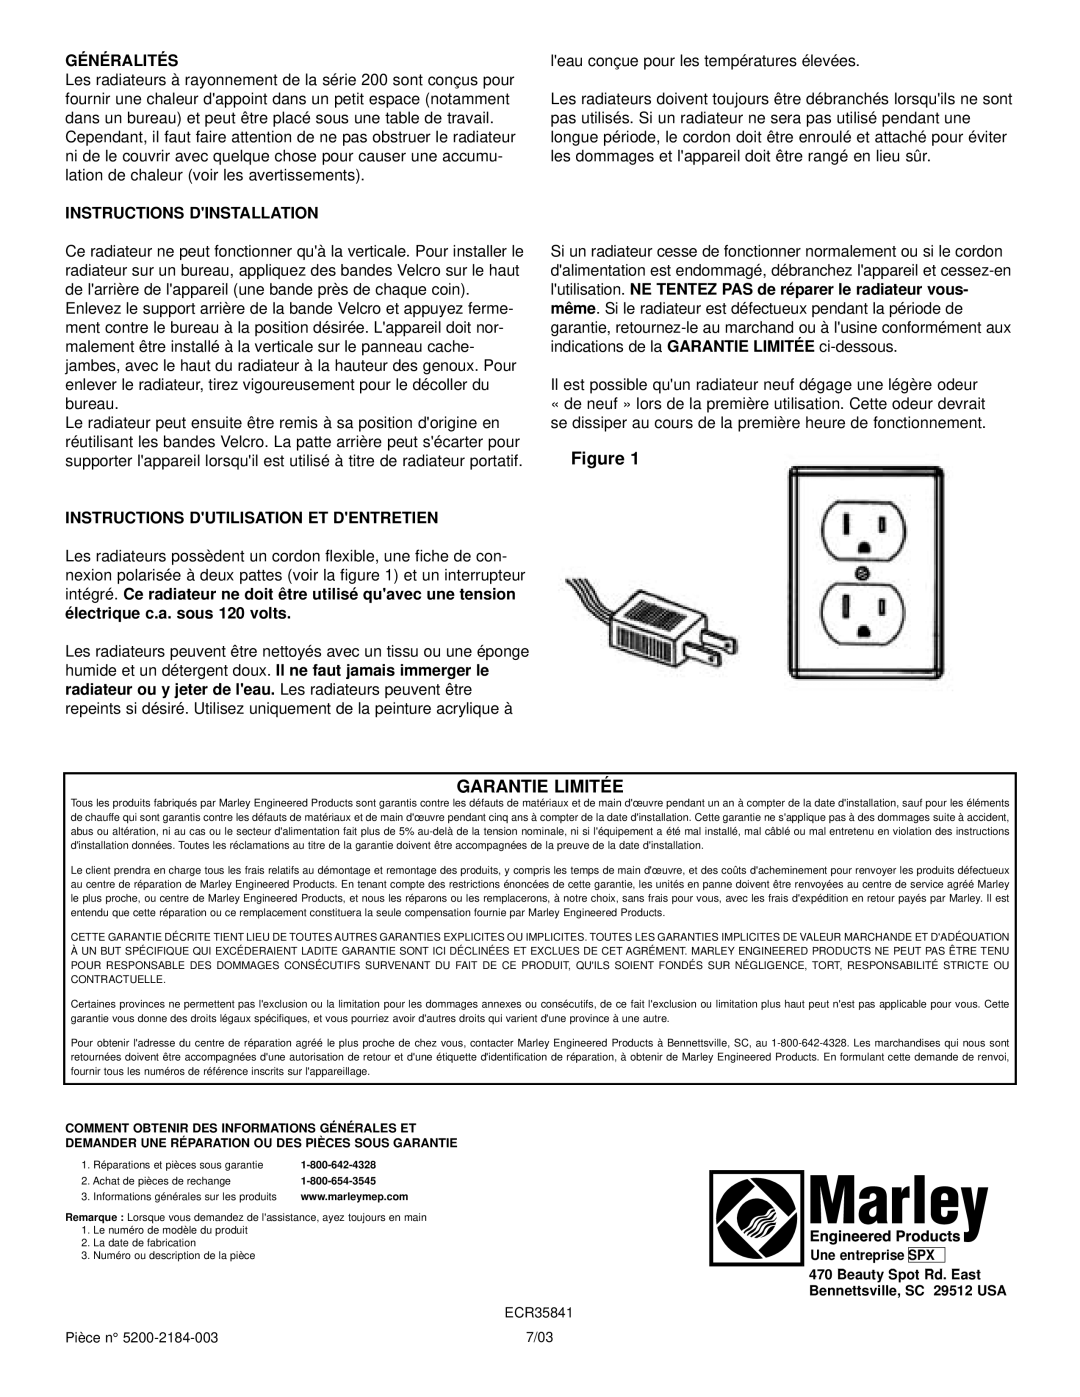 Marley Engineered Products Radiant Heater warranty Garantie Limité E, Gé Né Ralité S, Instructions Dinstallation 